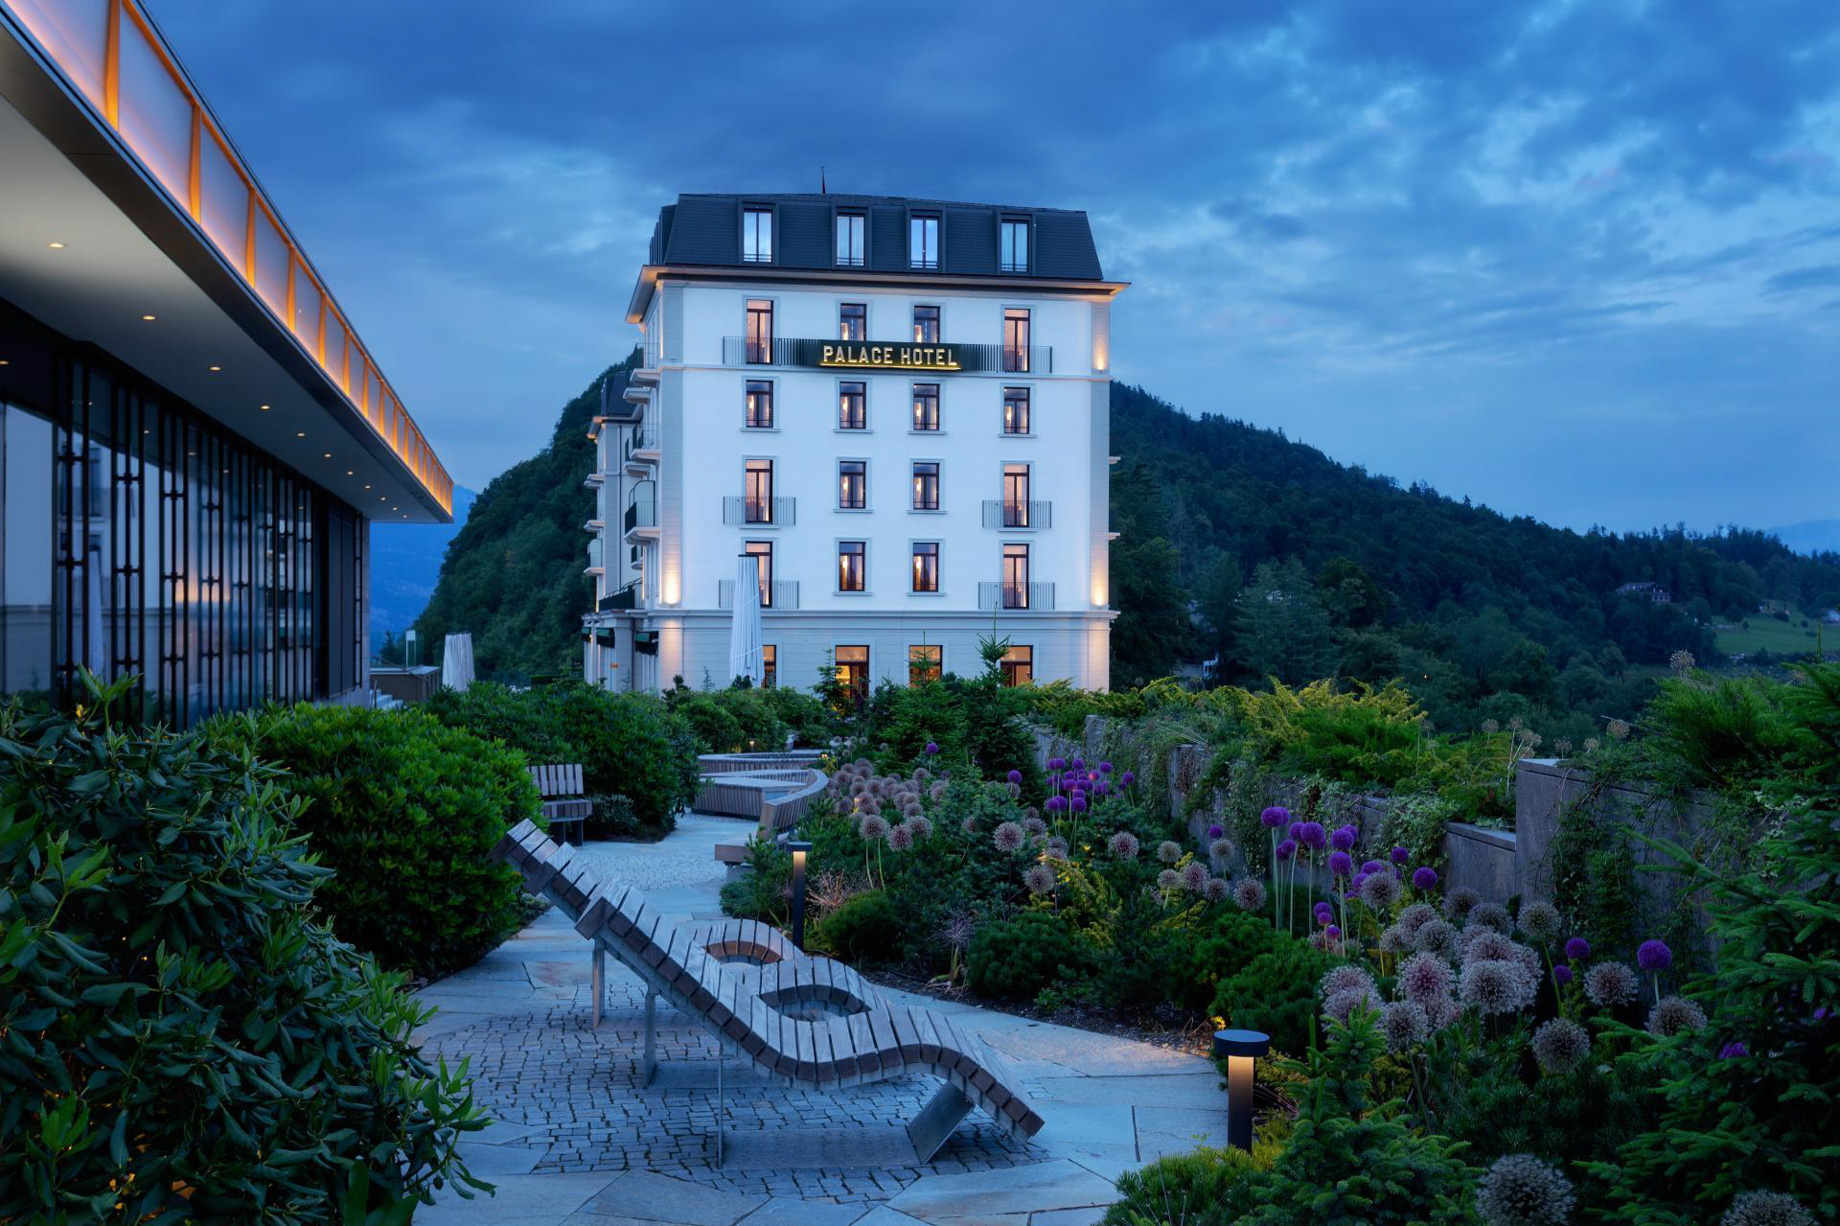 Palace Hotel – Burgenstock Hotels & Resort – Obburgen, Switzerland – Palace Hotel at Night